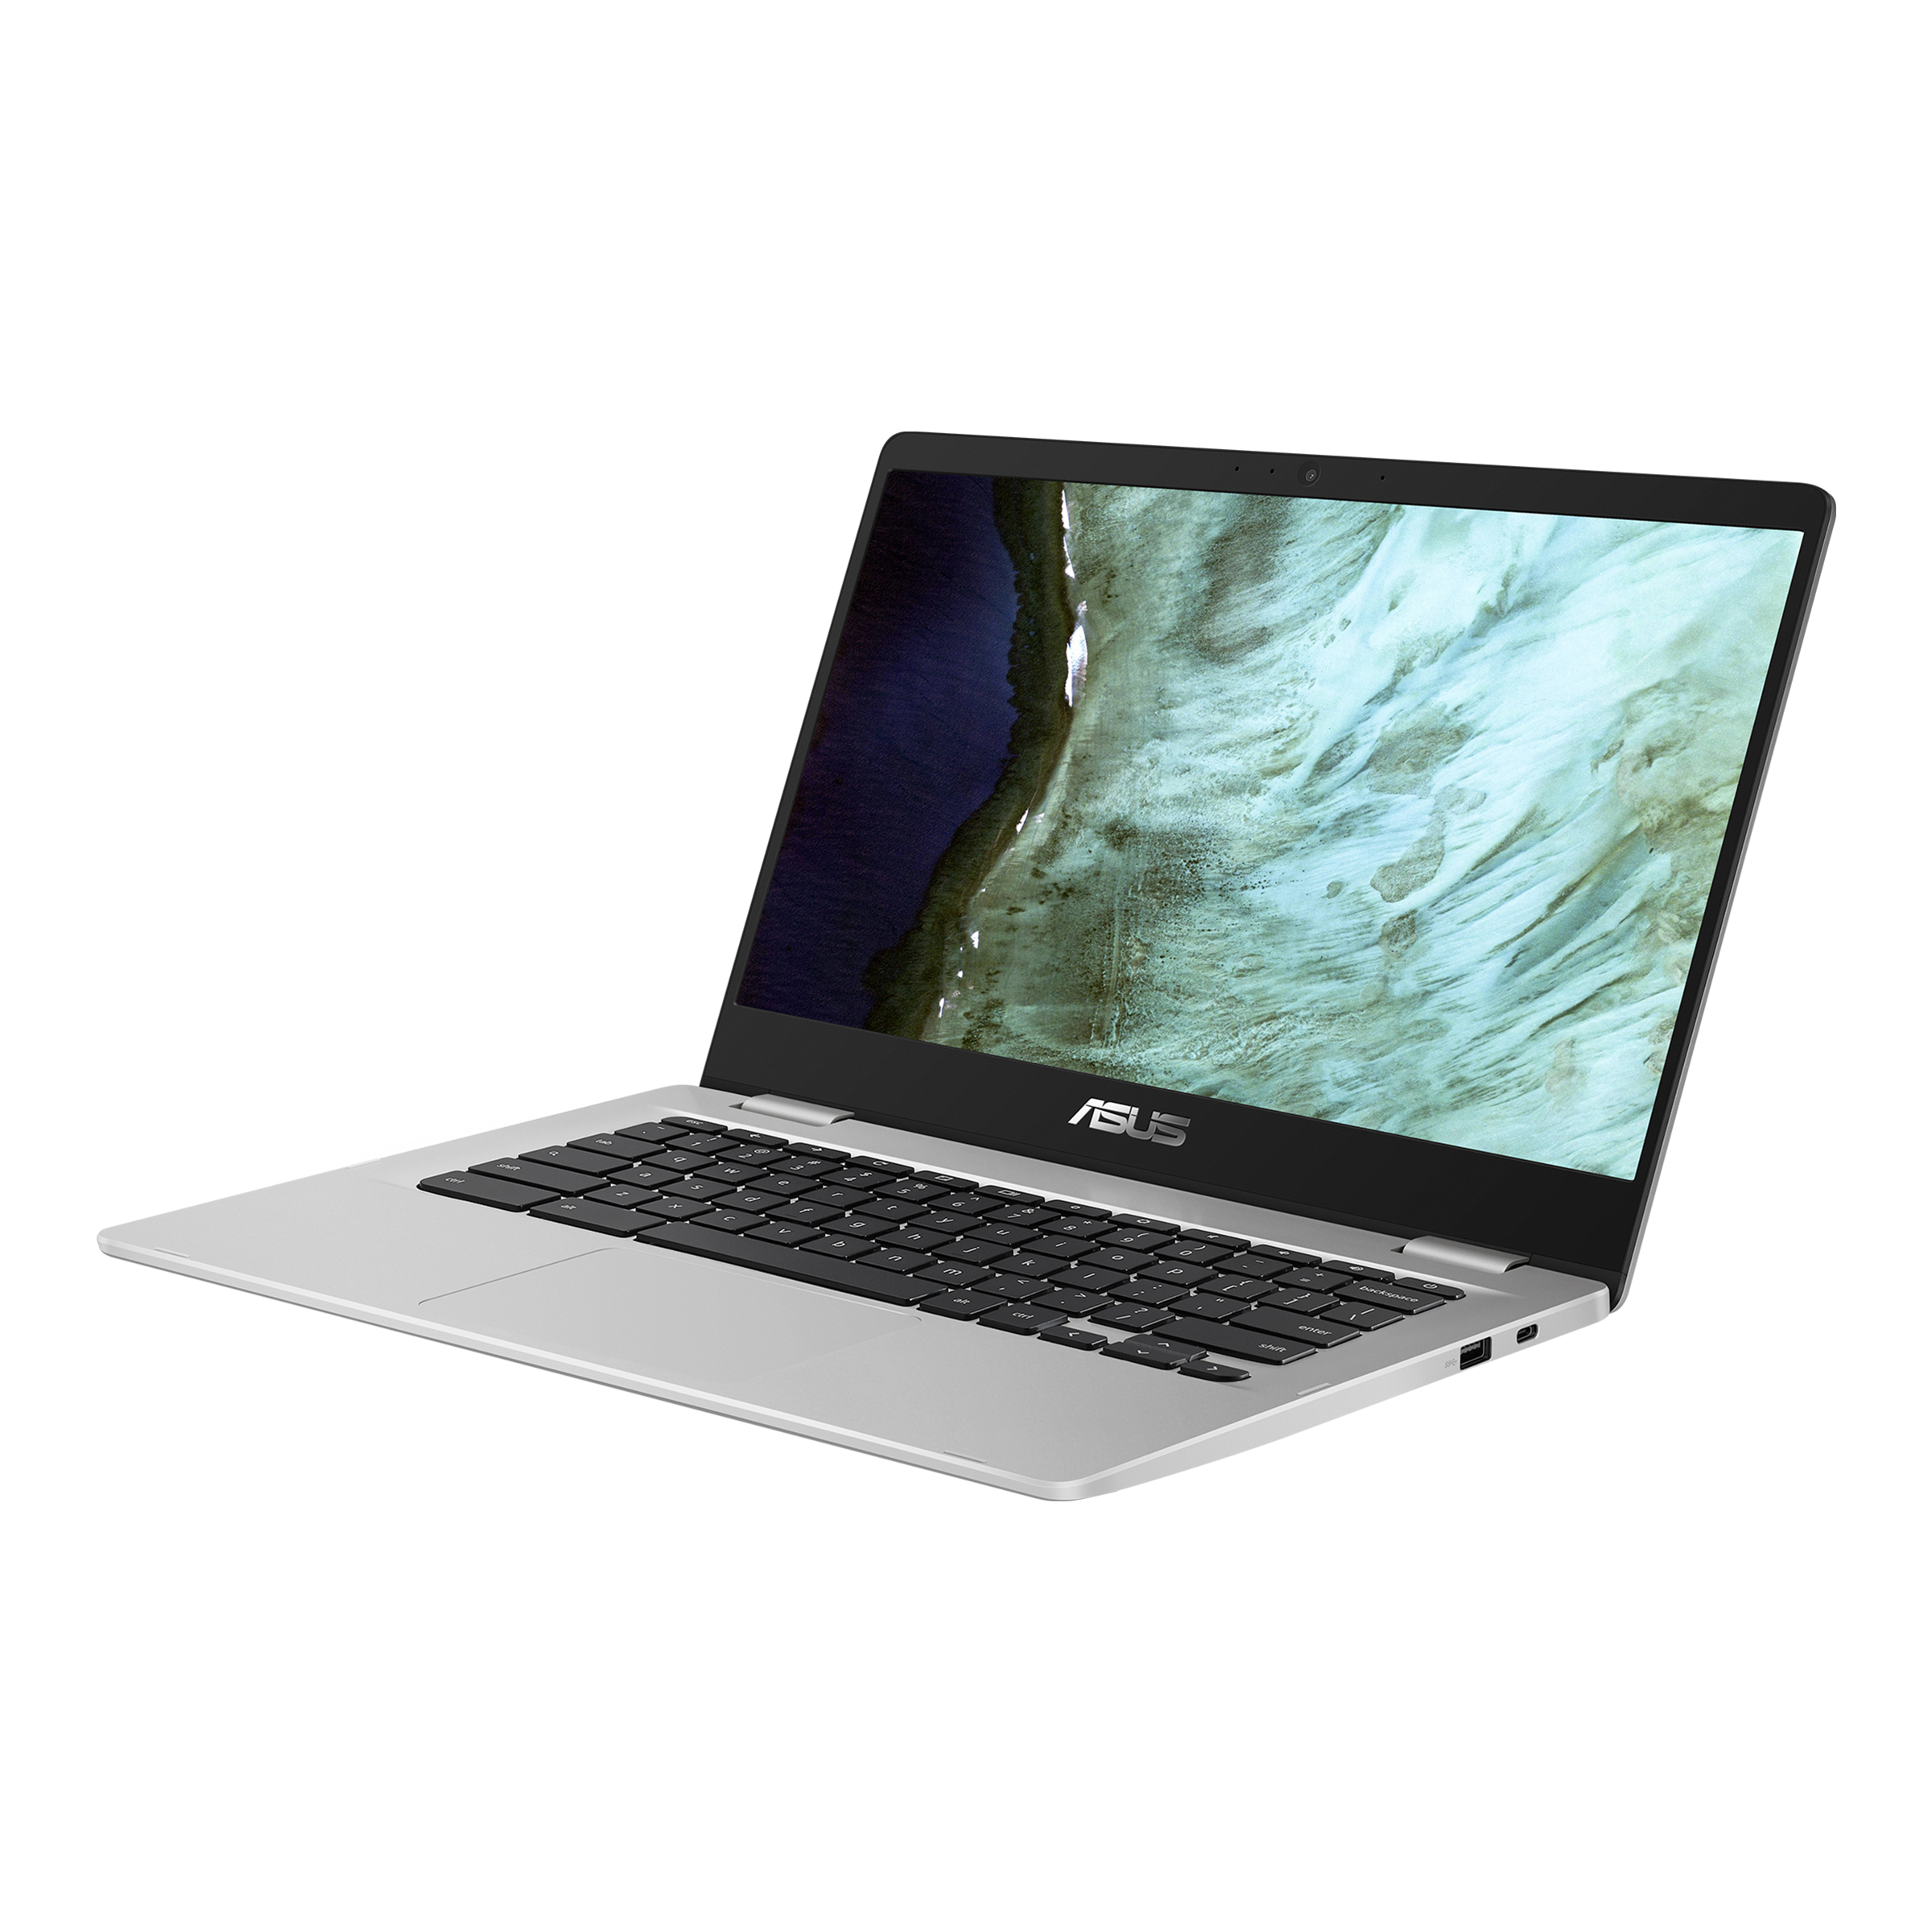 ASUS Chromebook C423｜Laptops For Home｜ASUS Global